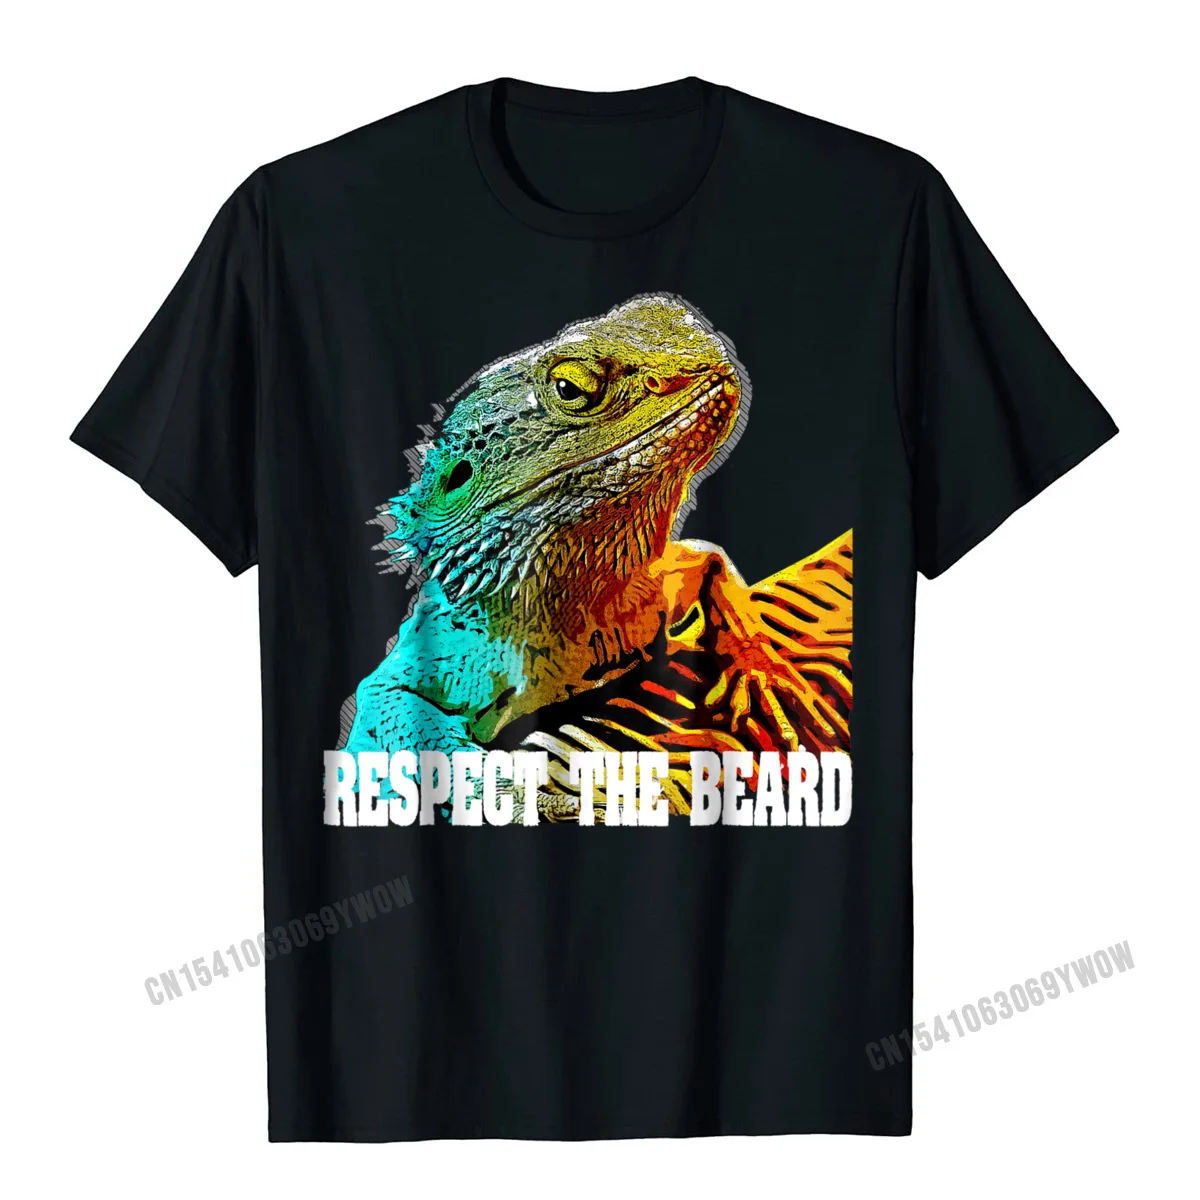 Respect The Beard T Shirt Funny Bearded Dragon T-Shirt Men Custom Tops Tees For Men Fashion Cotton T Shirt Print